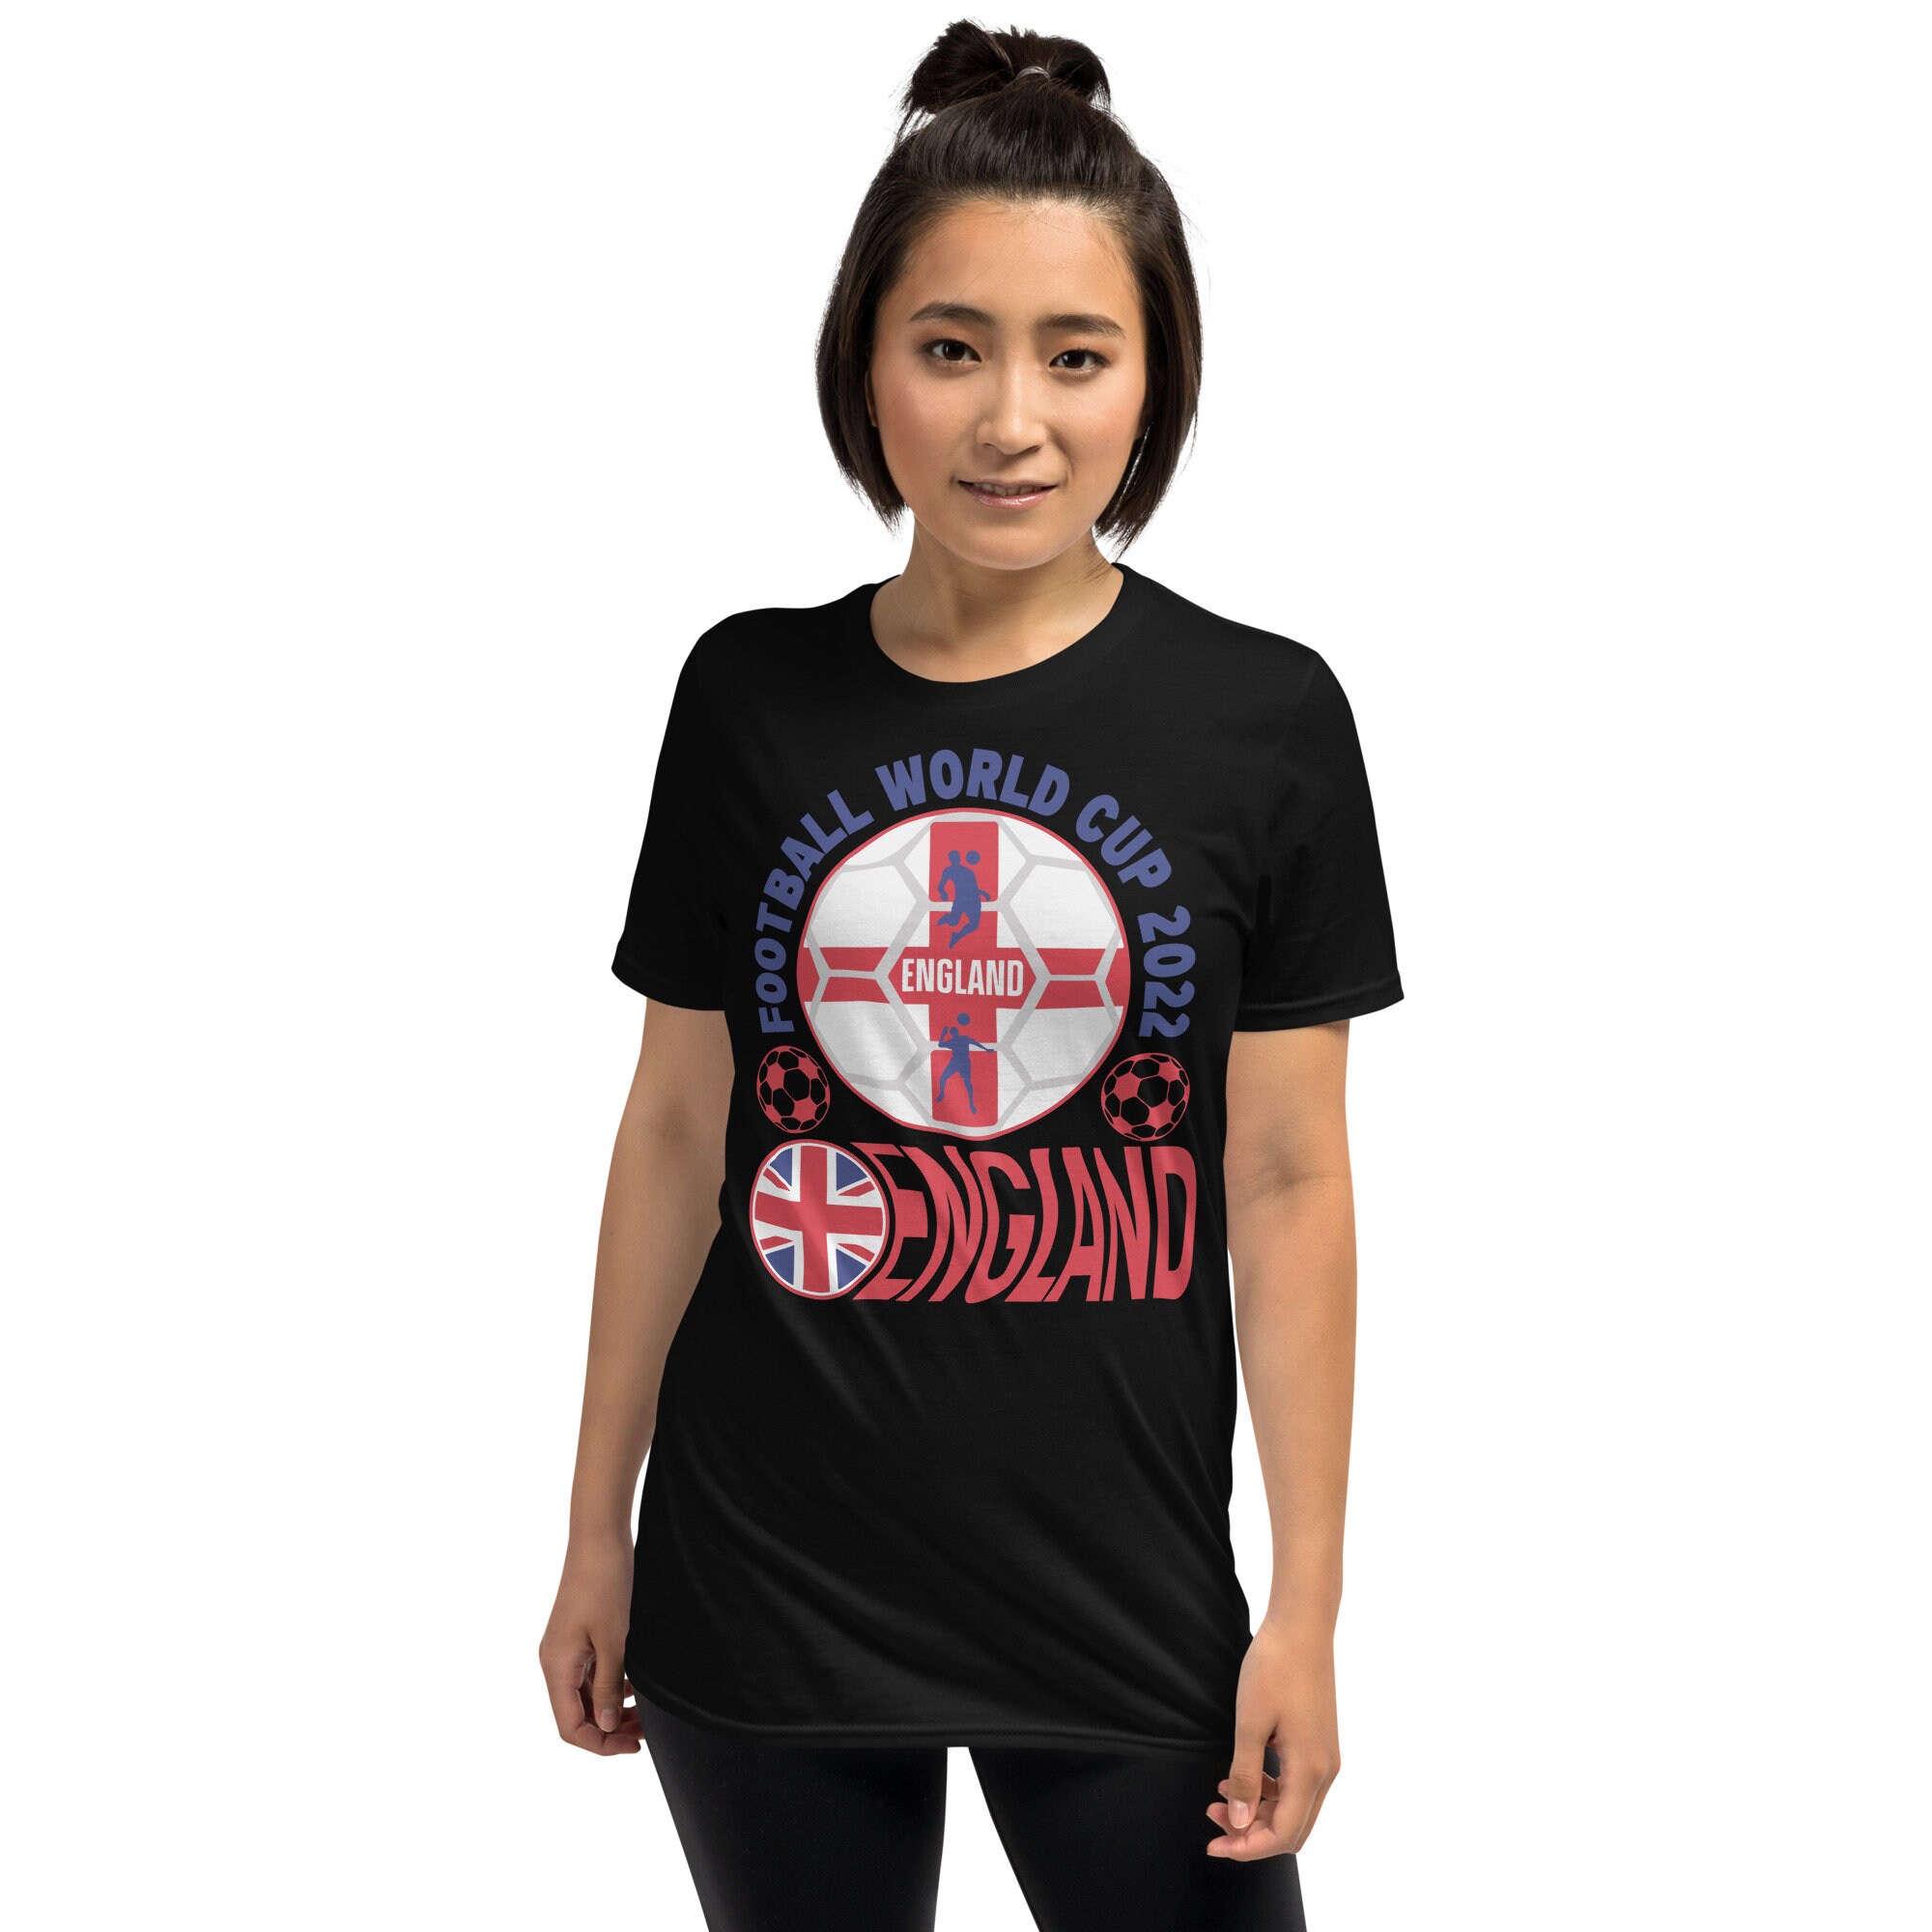 Discover England World Cup Shirt, England Football Shirt, England 2022 Shirt, England Soccer Jersey, England Shirt, England FIFA 2022, England Women